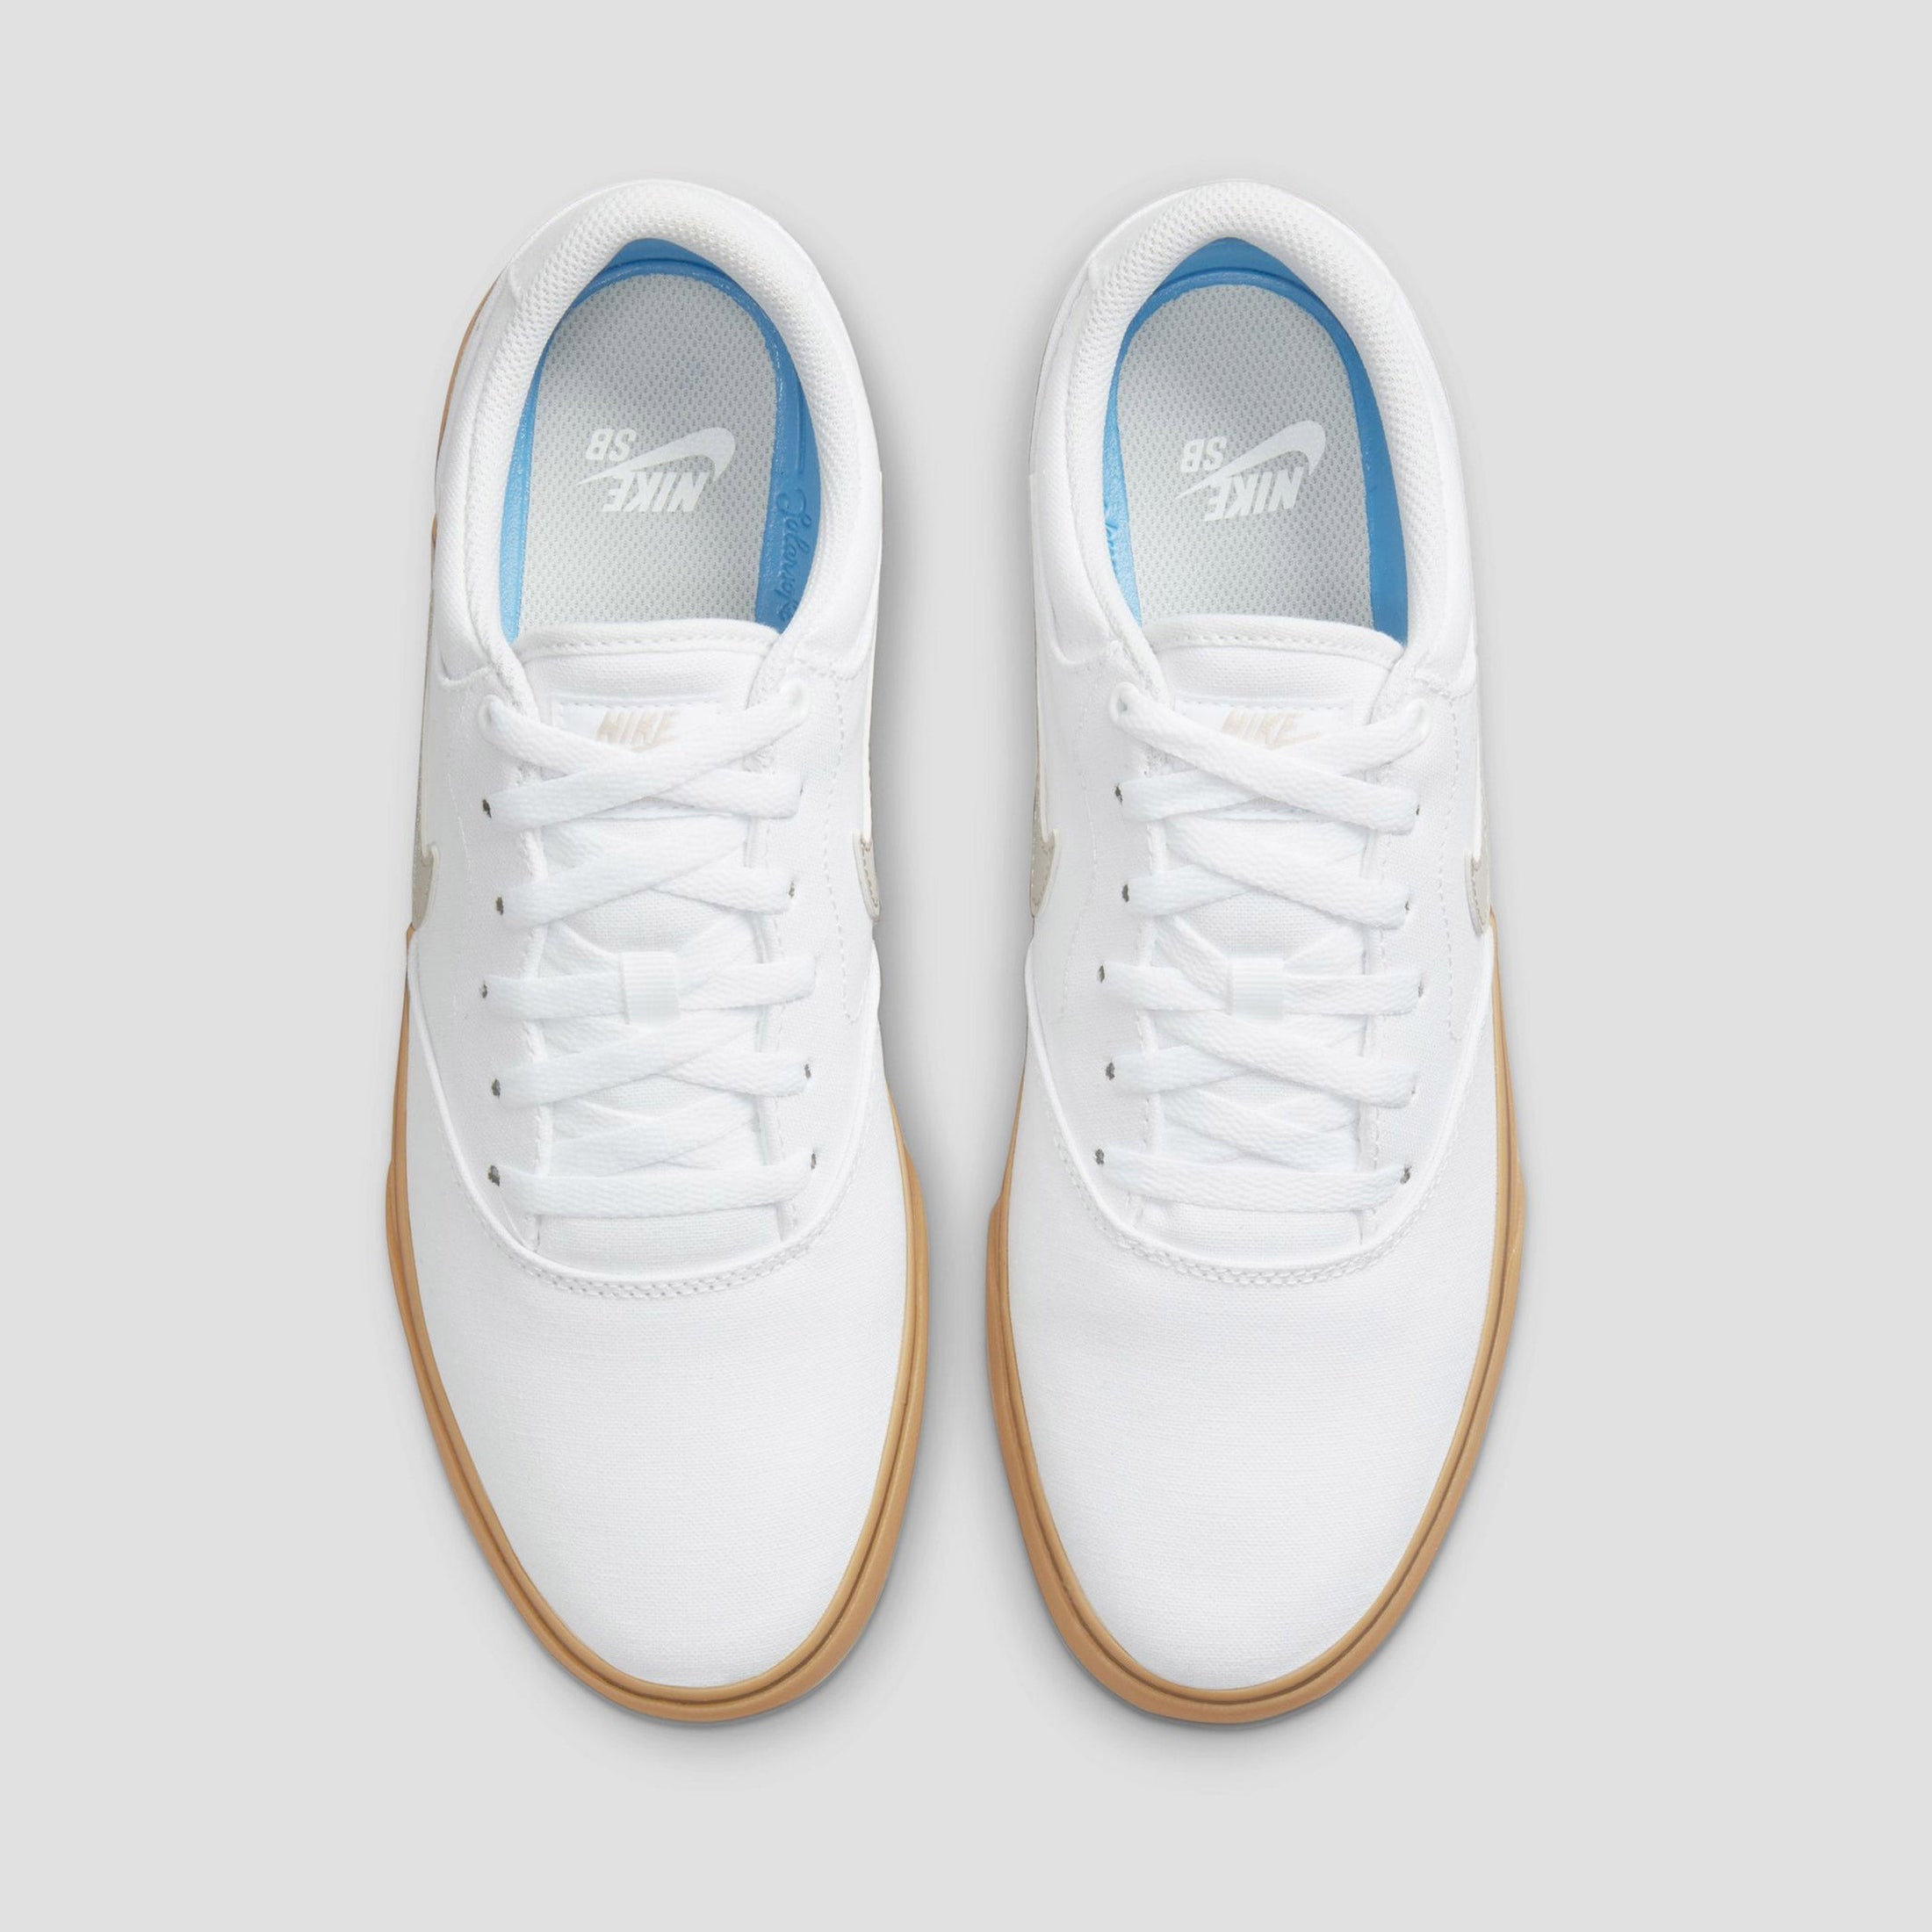 Nike SB Chron 2 Canvas Skate Shoes White / Light Bone / White Gum / Light Brown